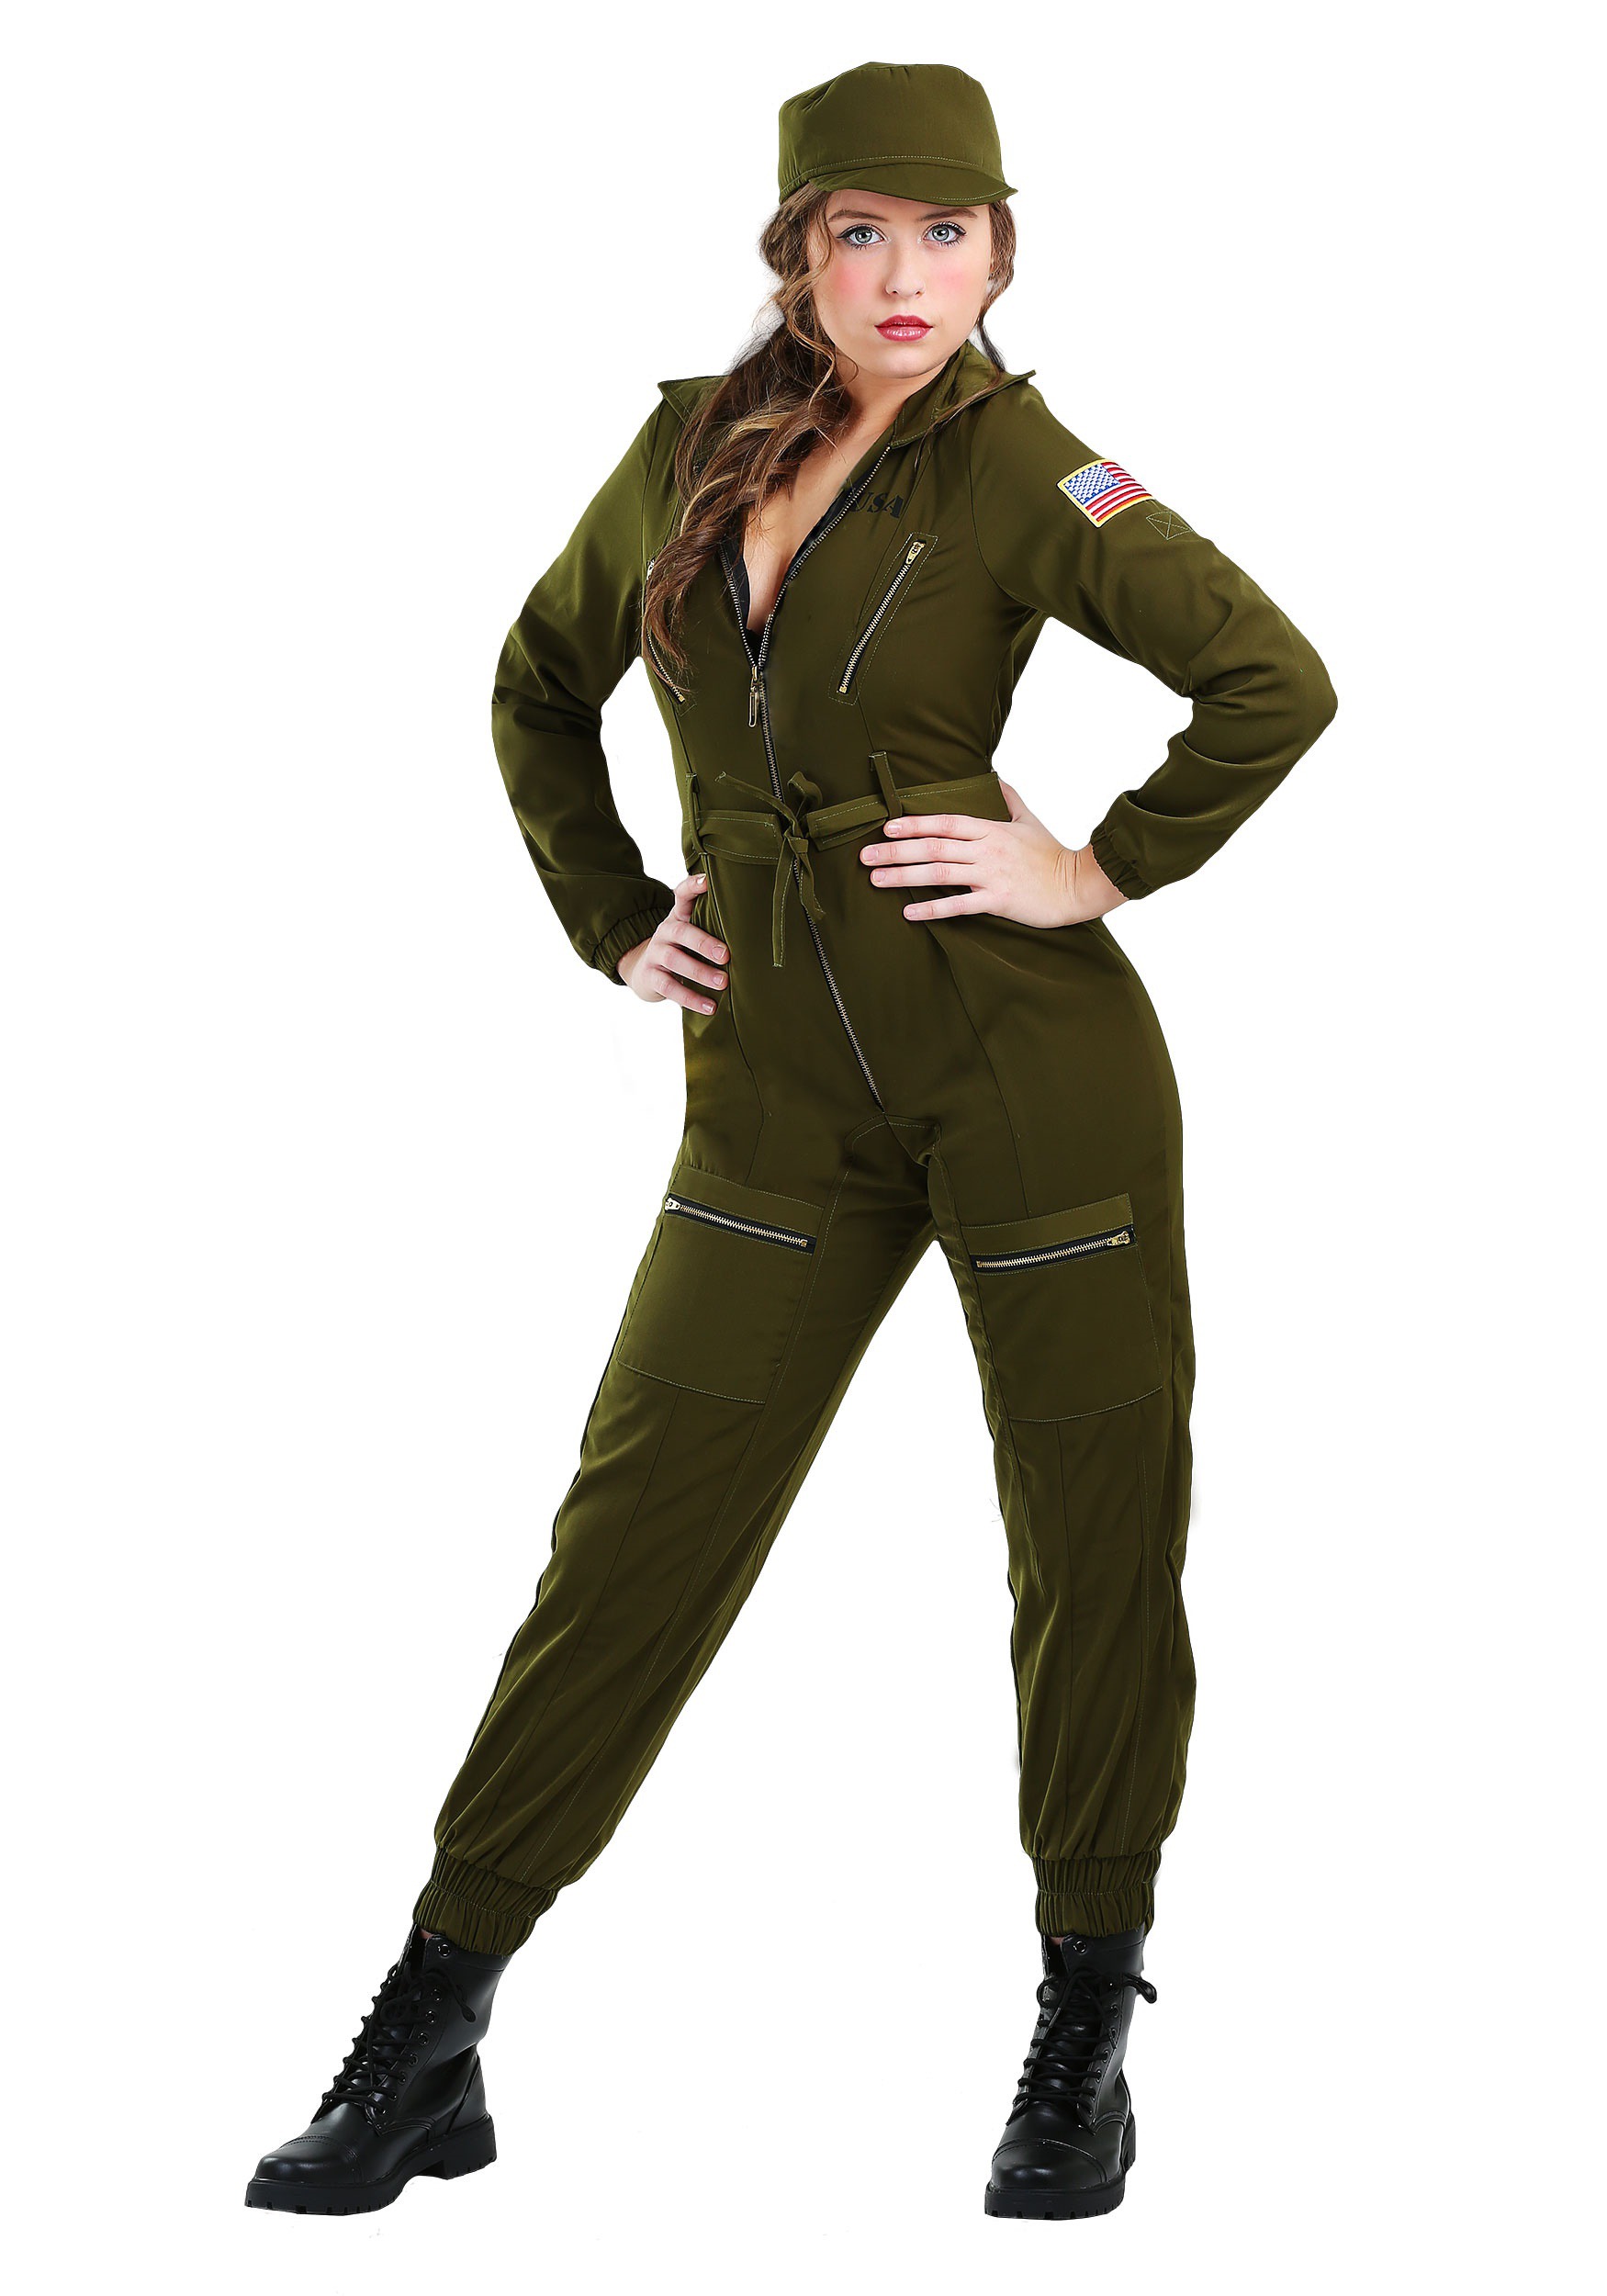 Photos - Fancy Dress FUN Costumes Women's Plus Size Army Flightsuit Costume Green FUN1882PL